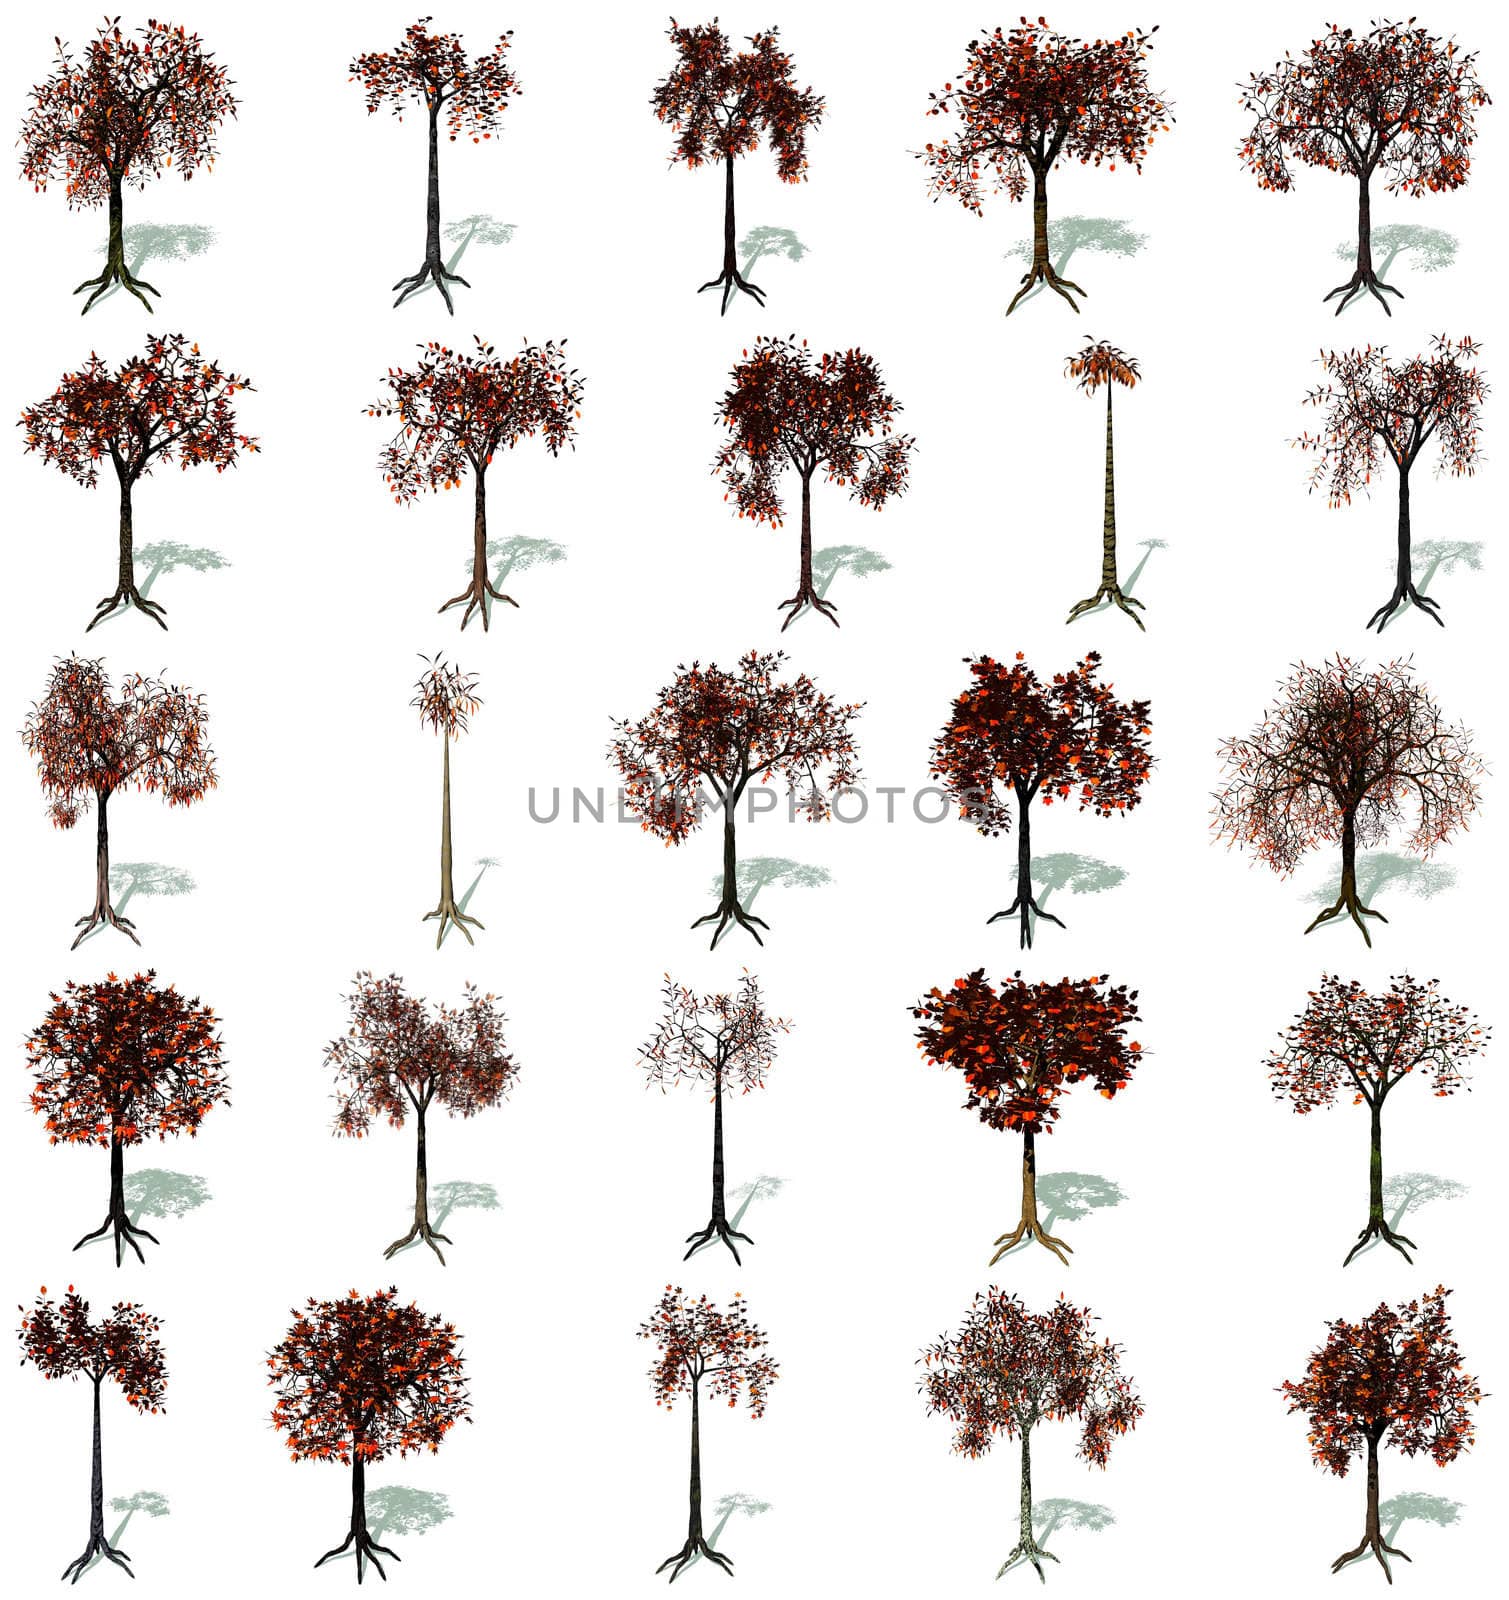 Autumn trees set by Elenaphotos21